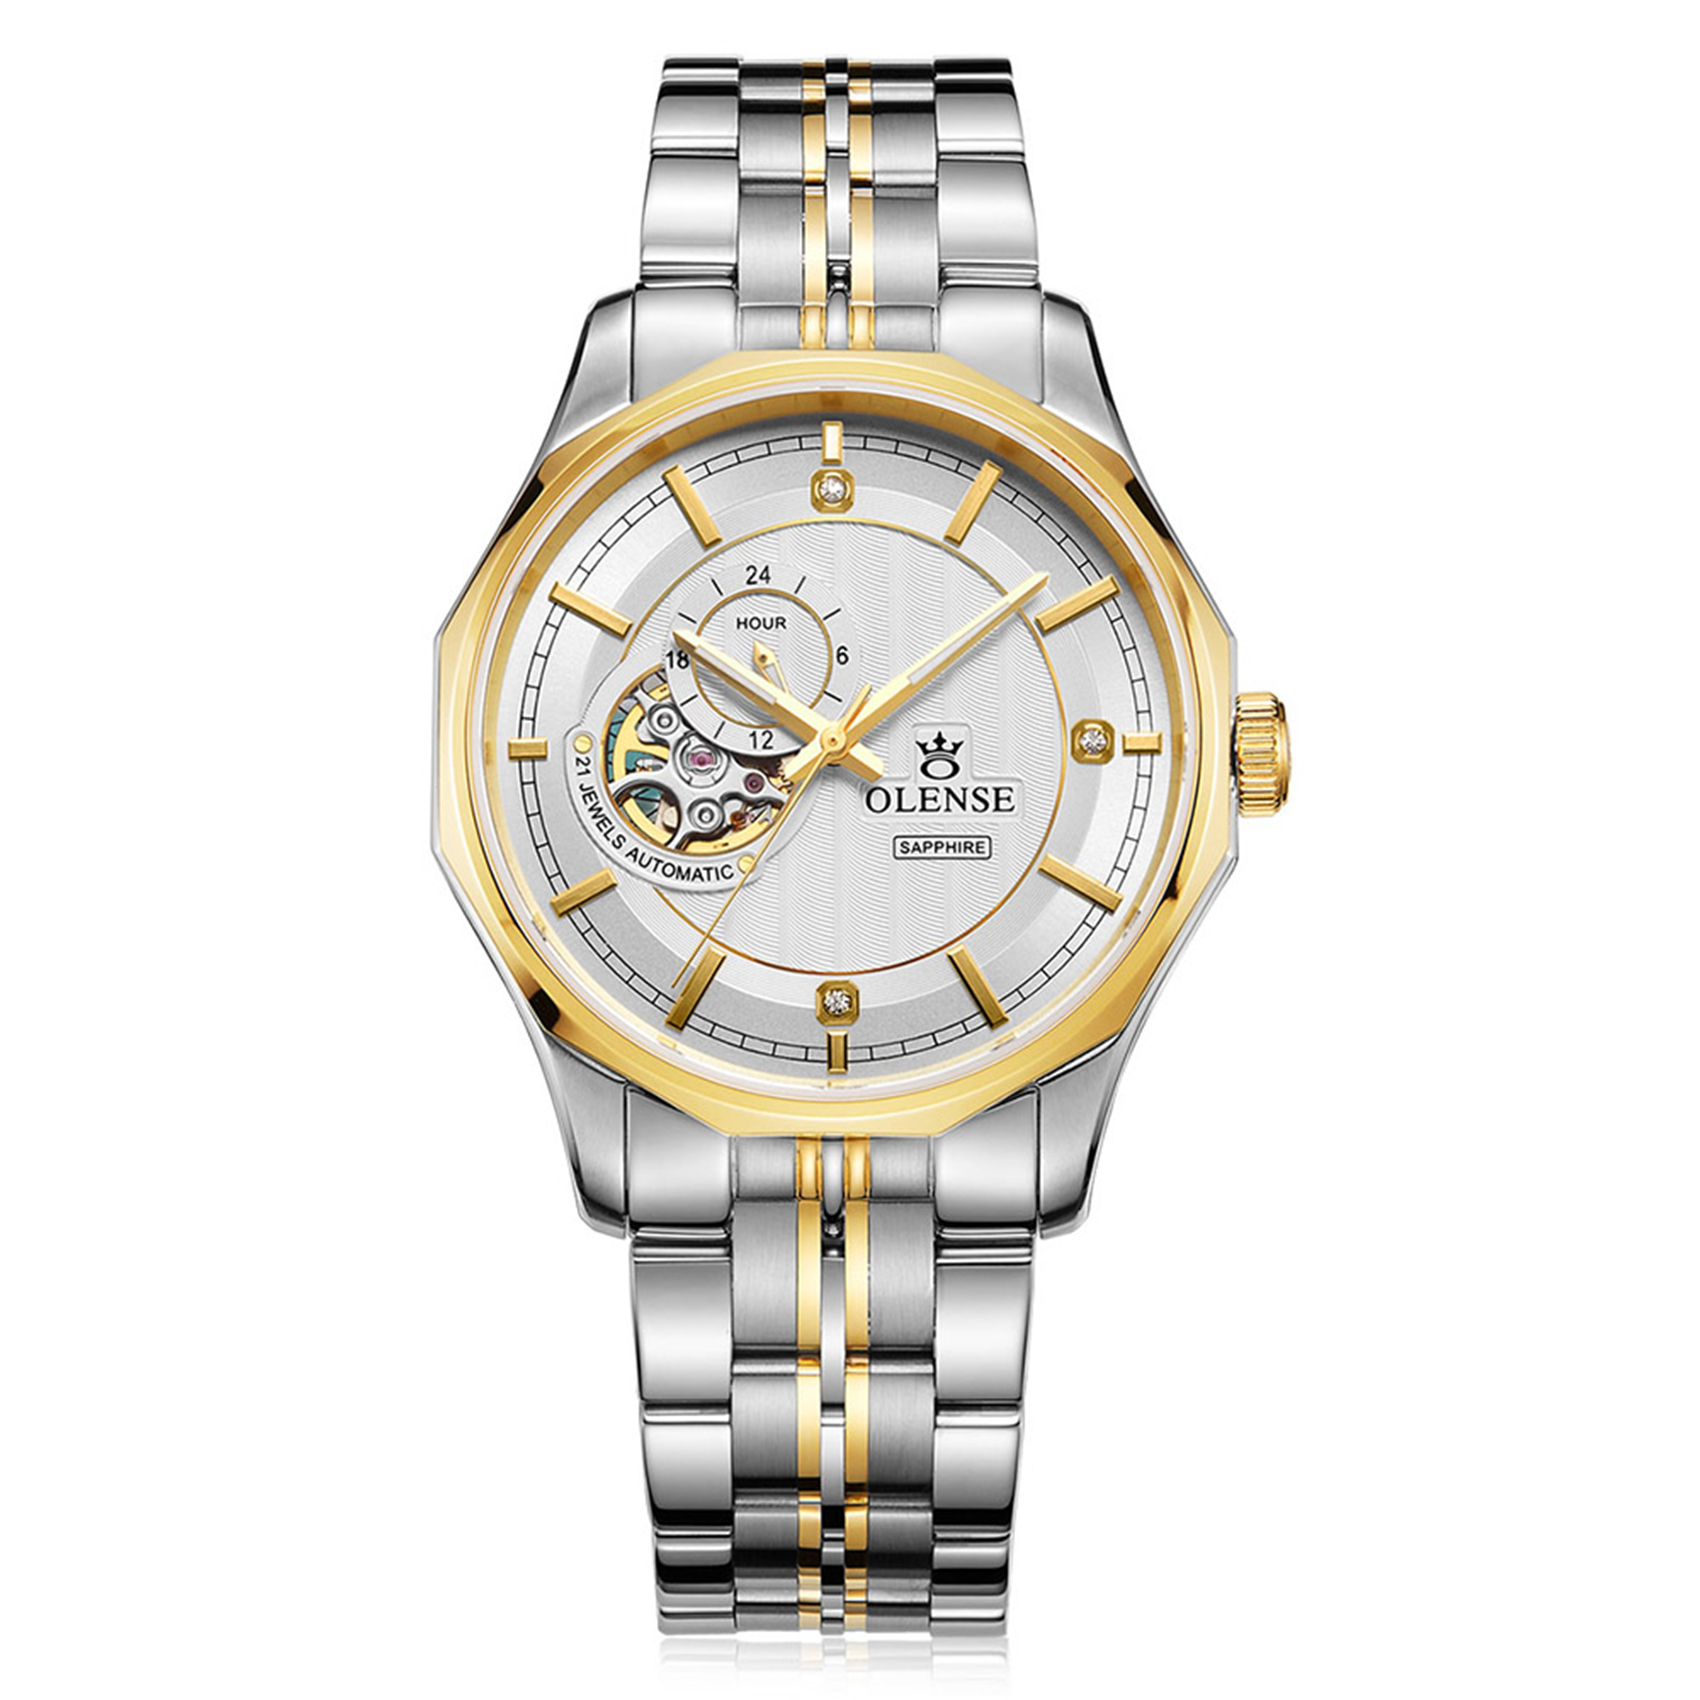 OLENSE - Silver Watch for Men, Automatic Mechanical, Luxury Wristwatch, 41mm, Diamond